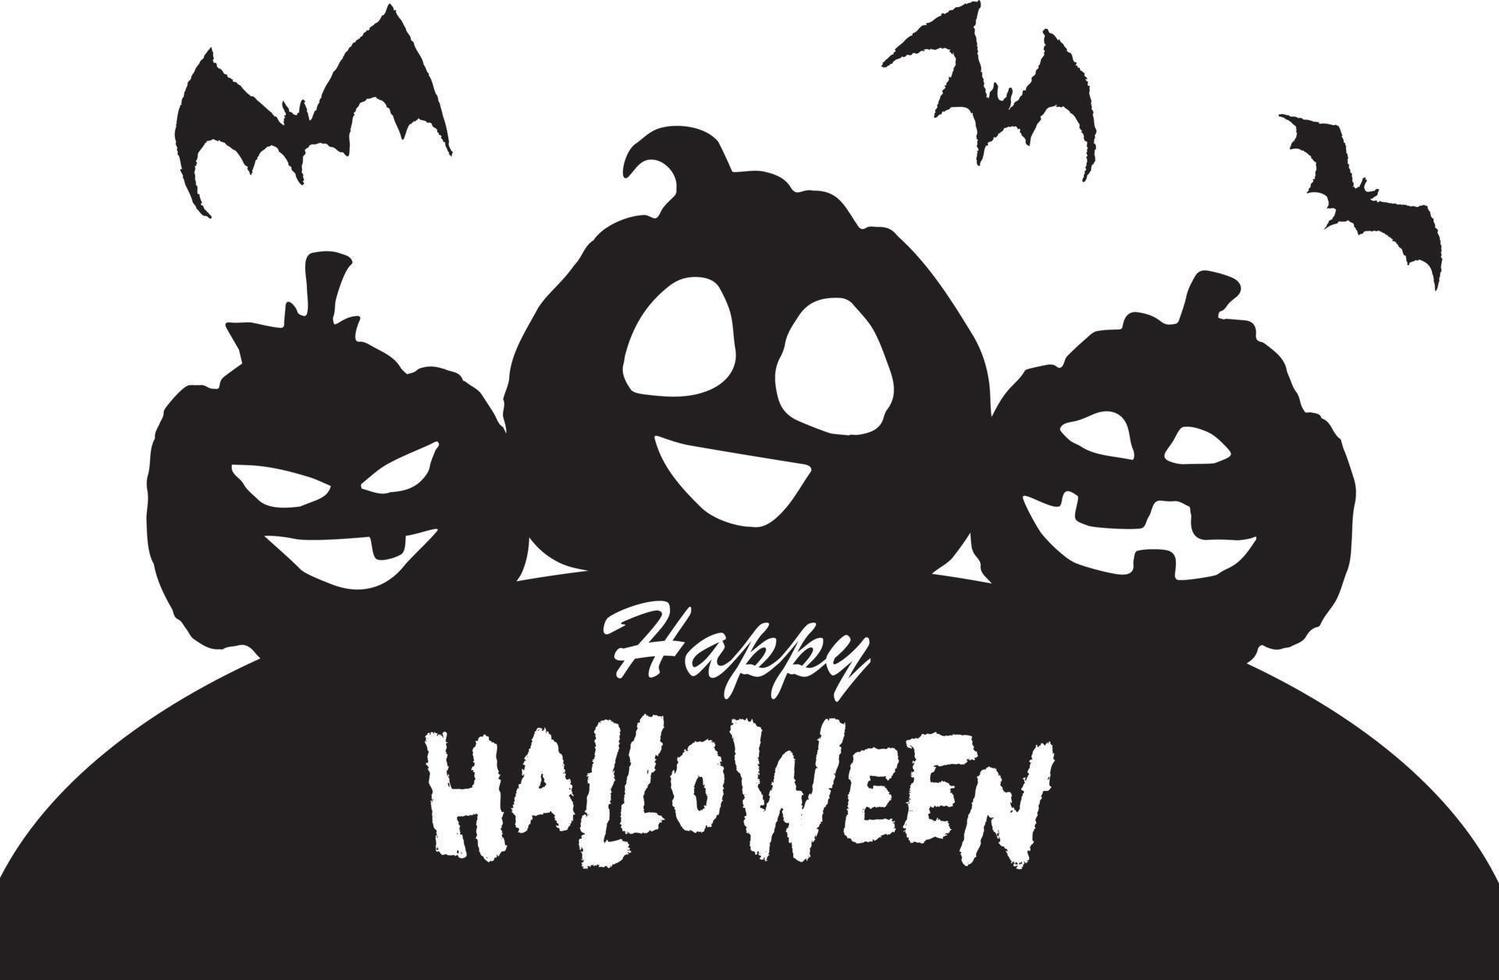 Happy Halloween Pumpkins curved with jack o lantern face. Vector cartoon illustration.